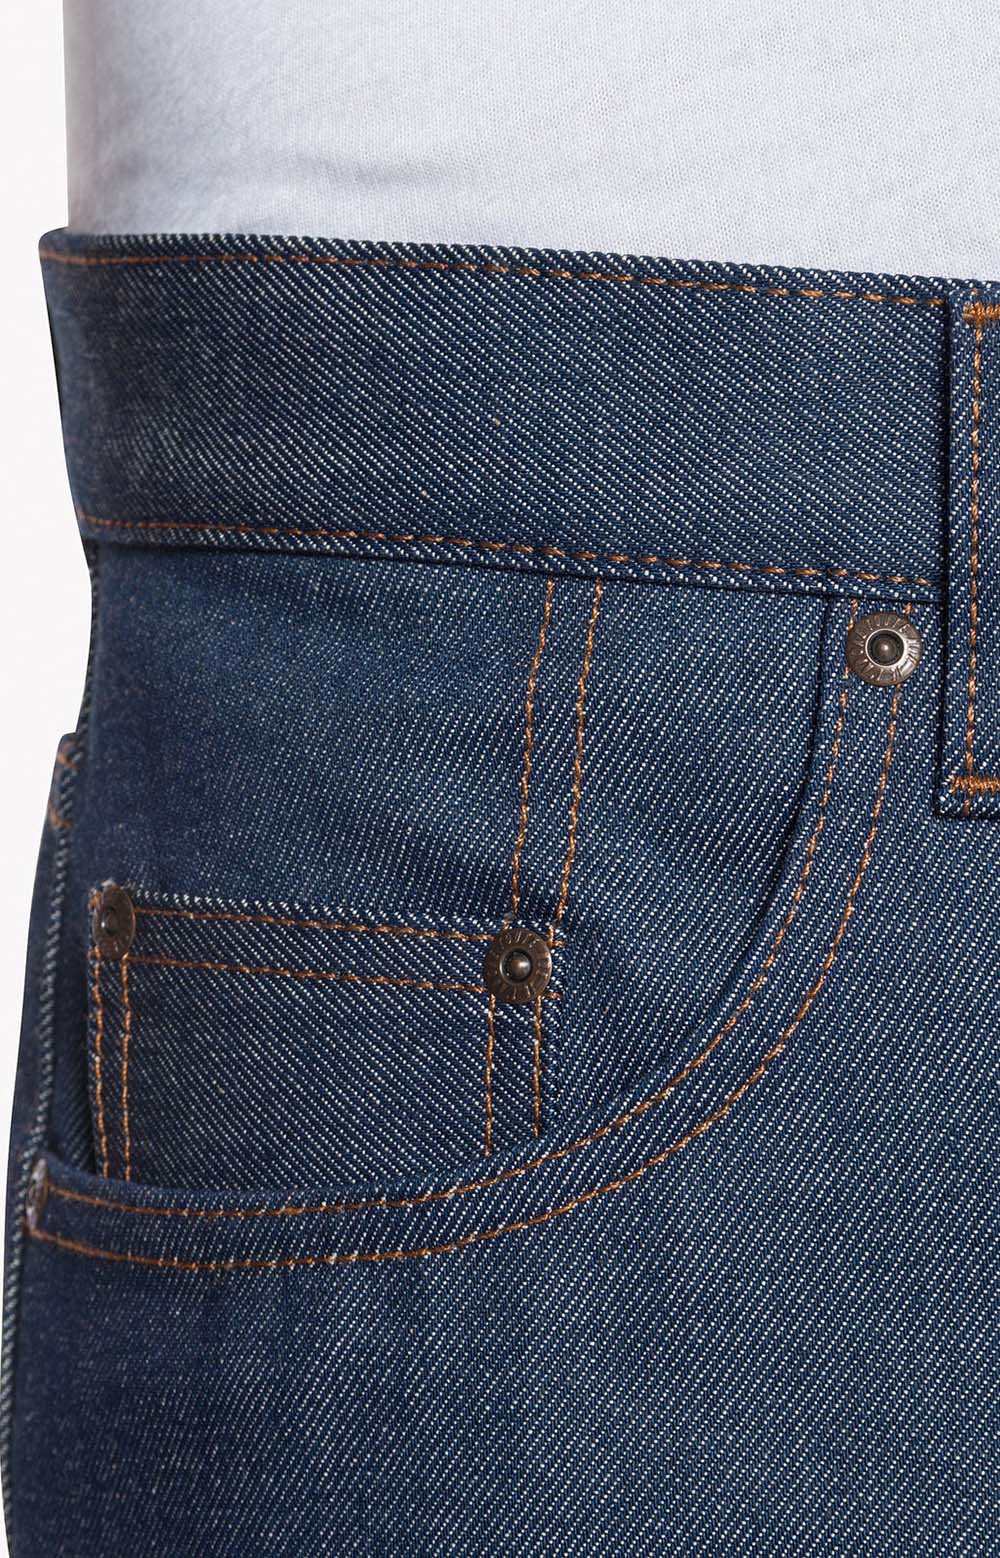 (101050106) Easy Guy Jeans - Natural Indigo Selvedge